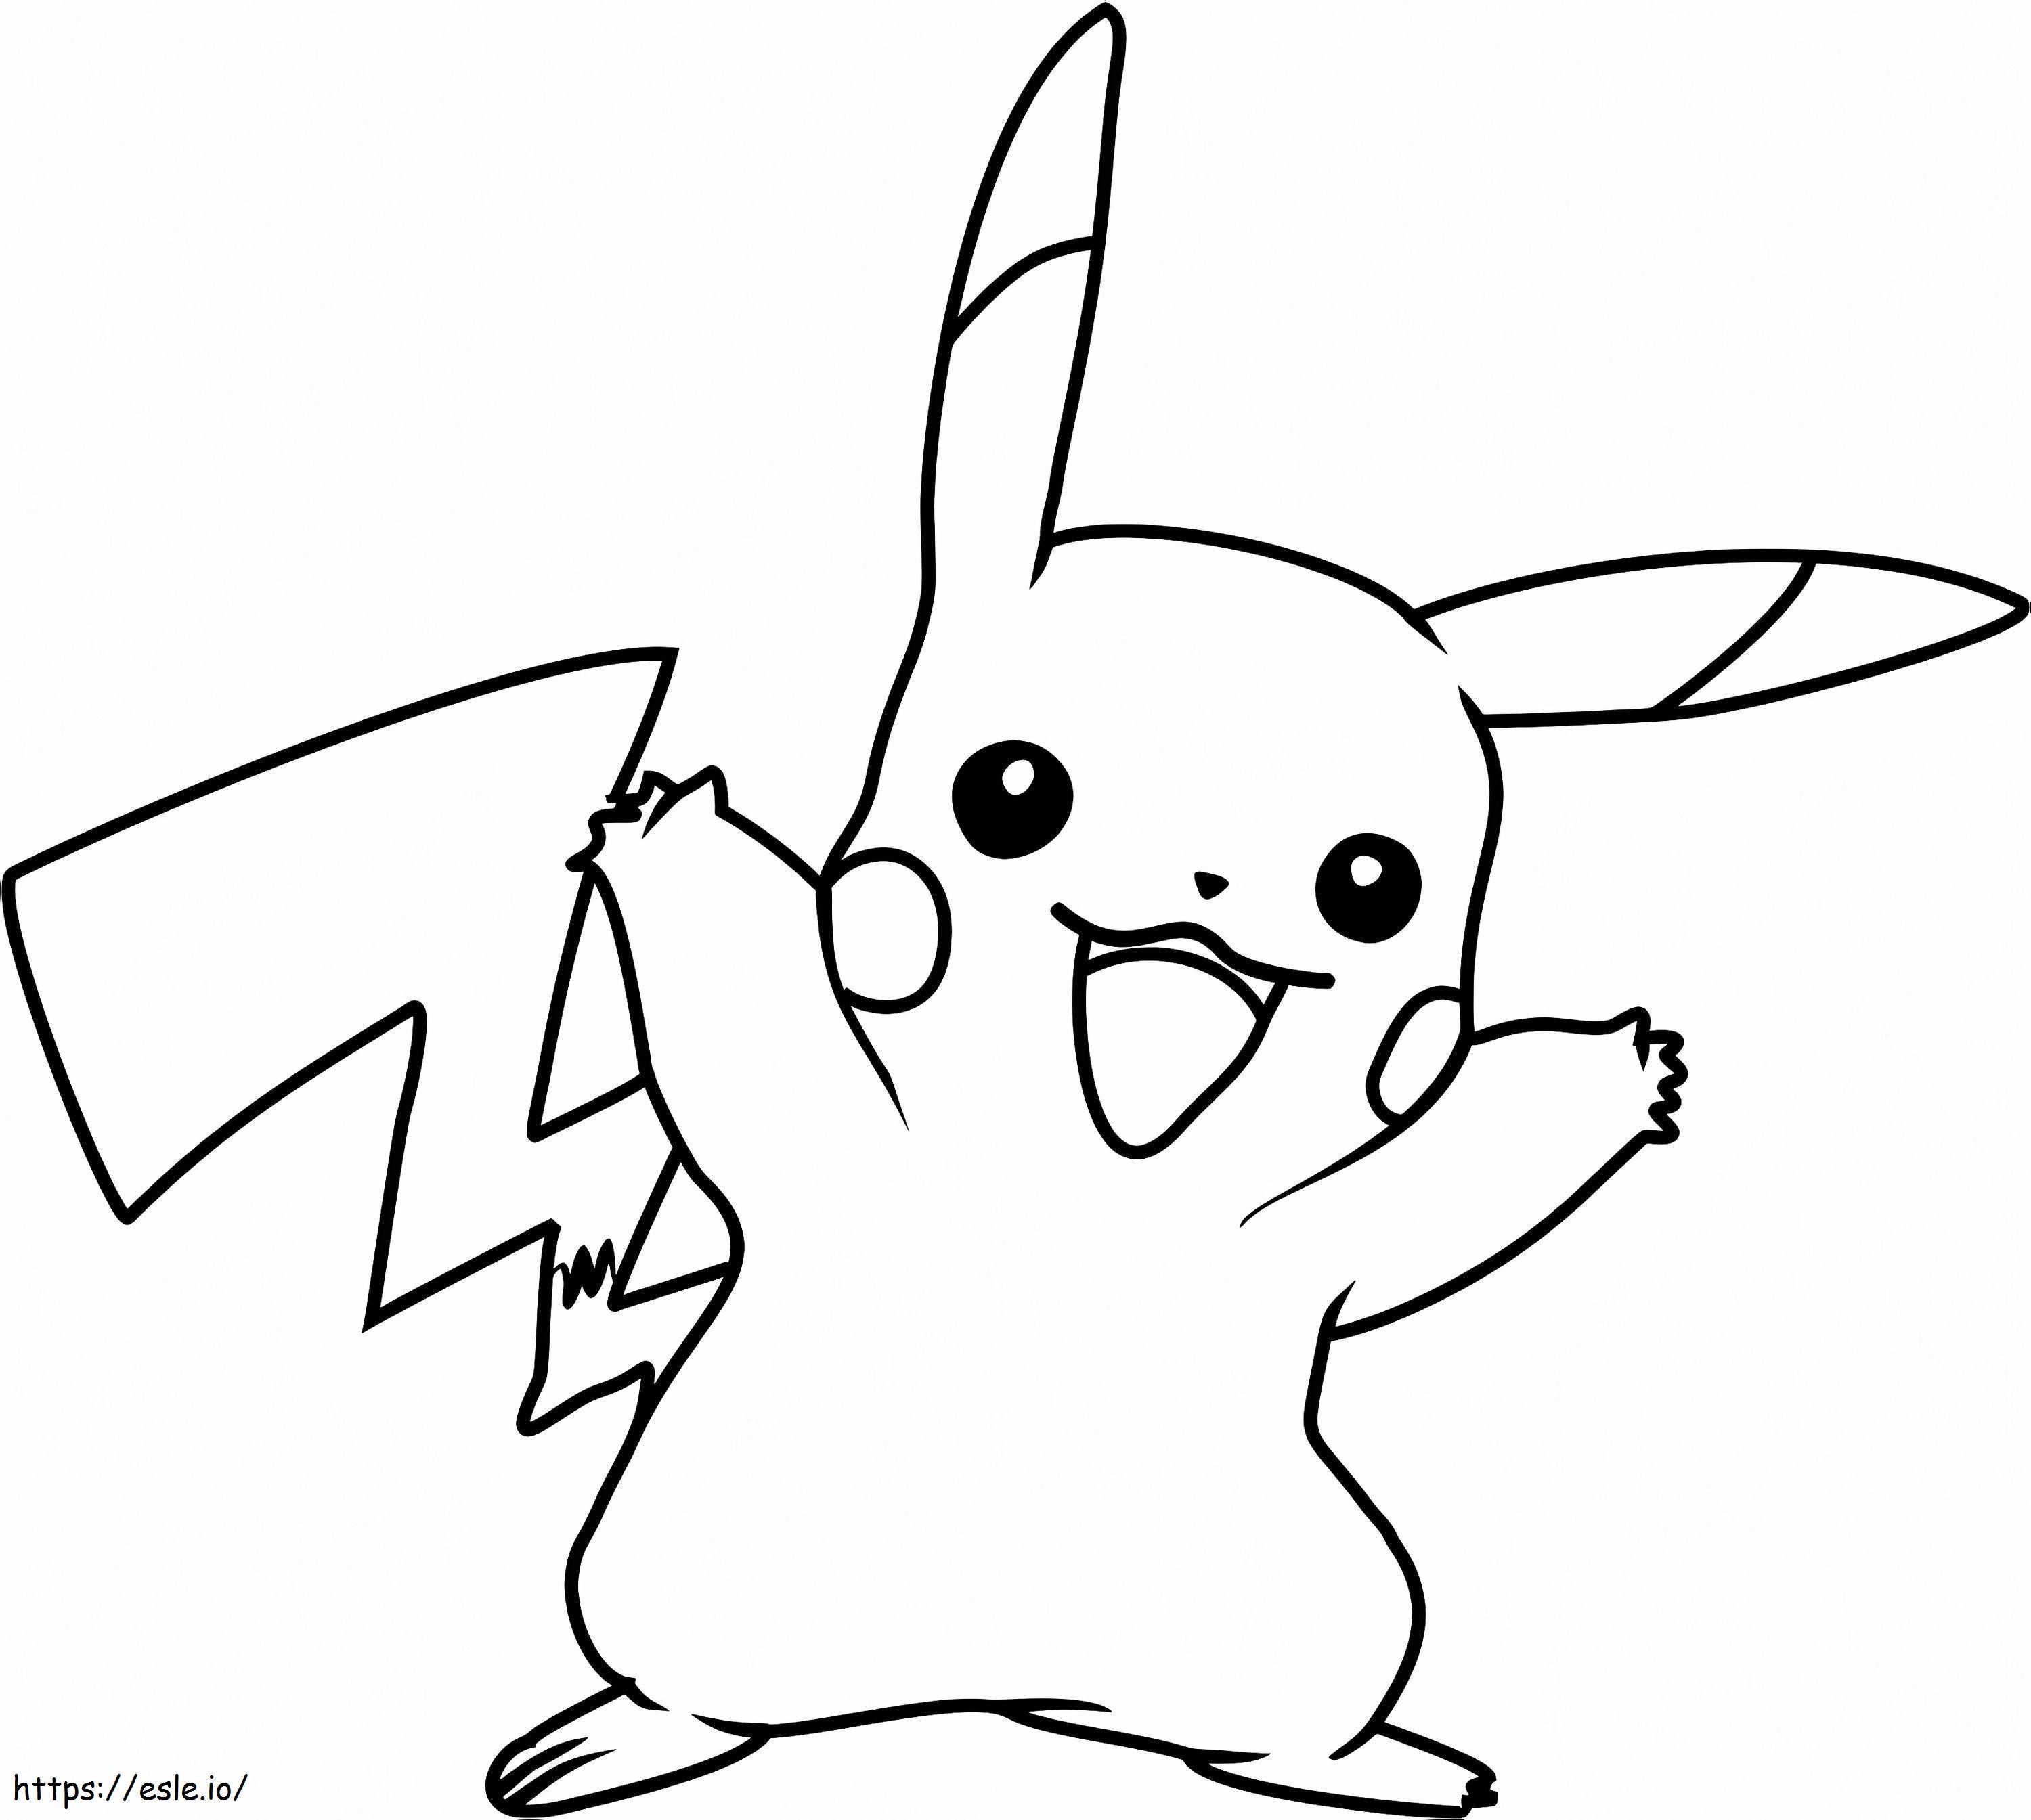 1530669716 Pokémon Pikachu A4 para colorir